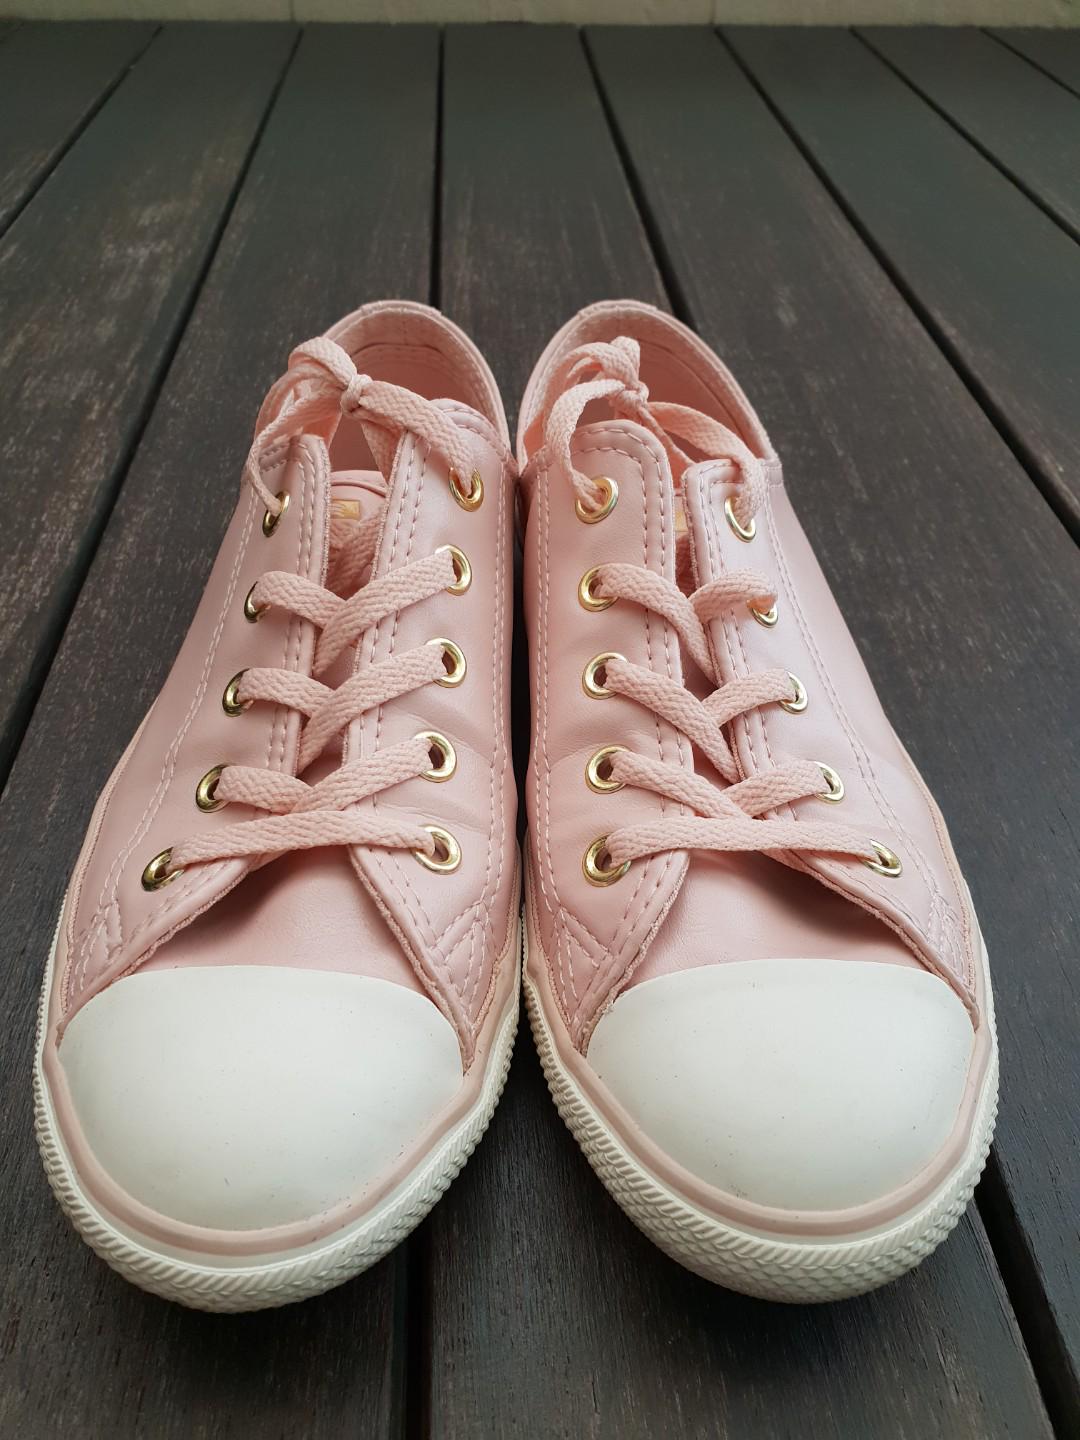 light pink converse